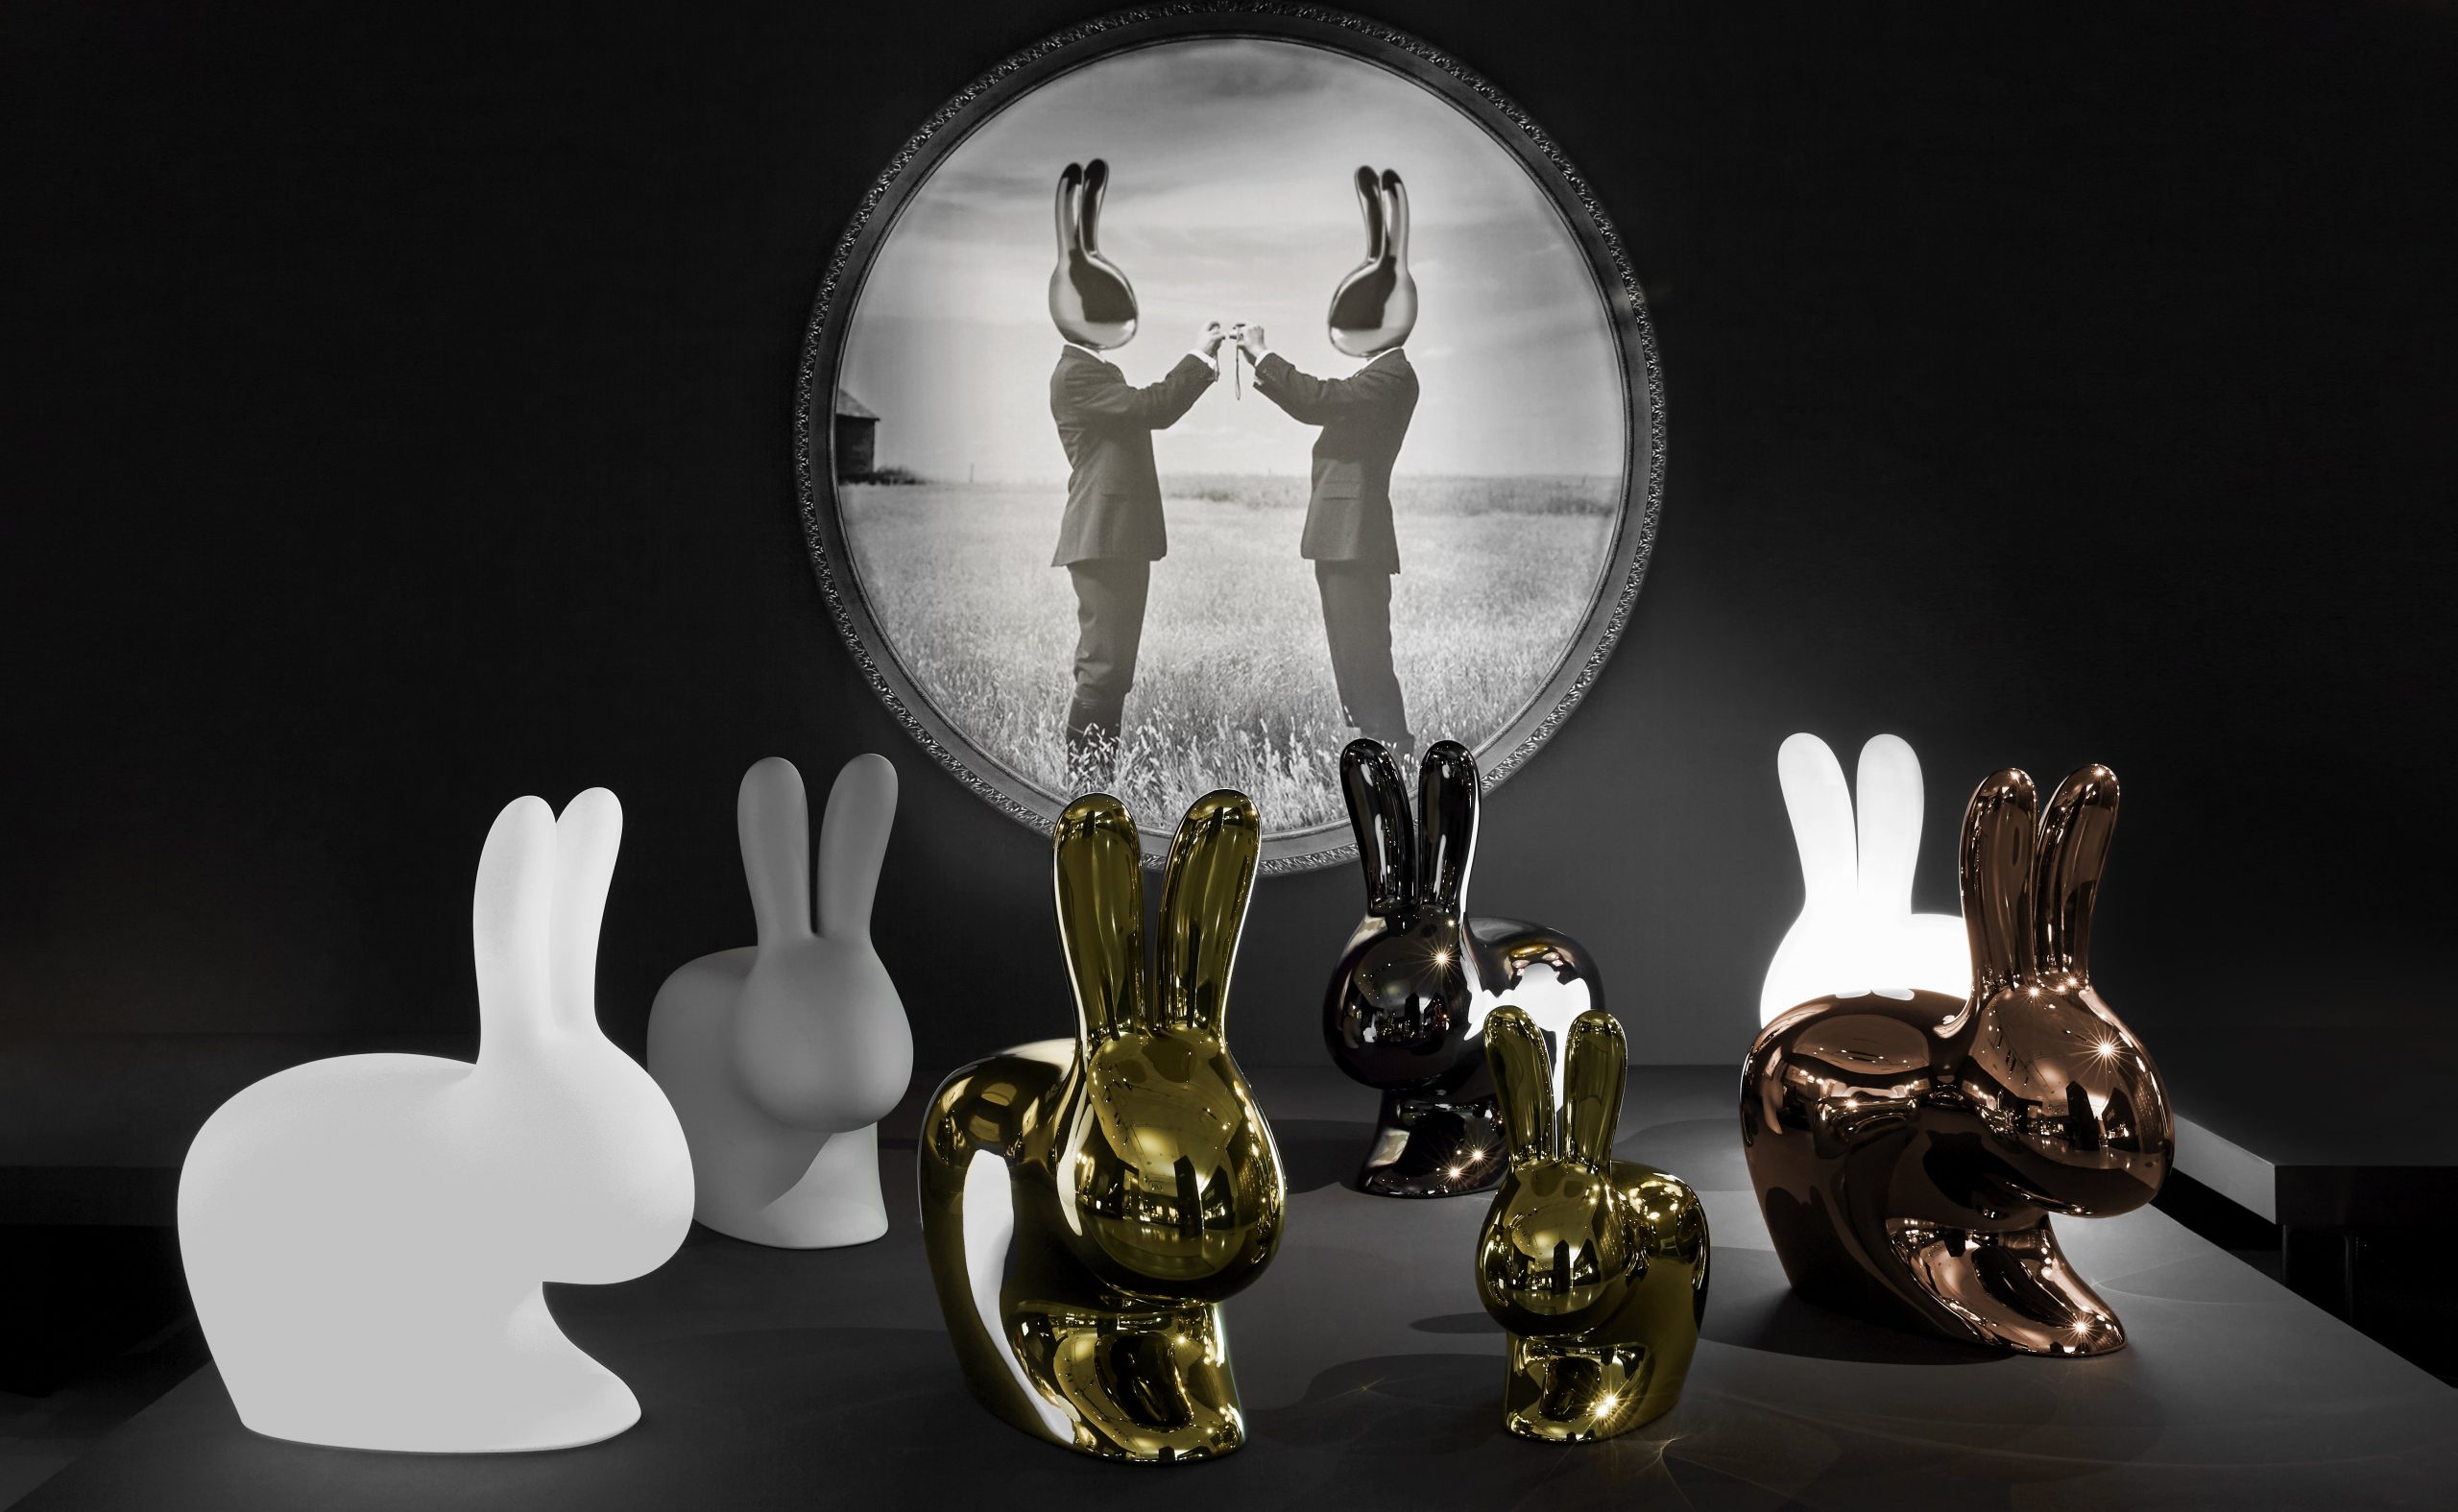 Rabbit Chair Metal Baby Qeeboo su AD Online Store - Spedizione Gratuita